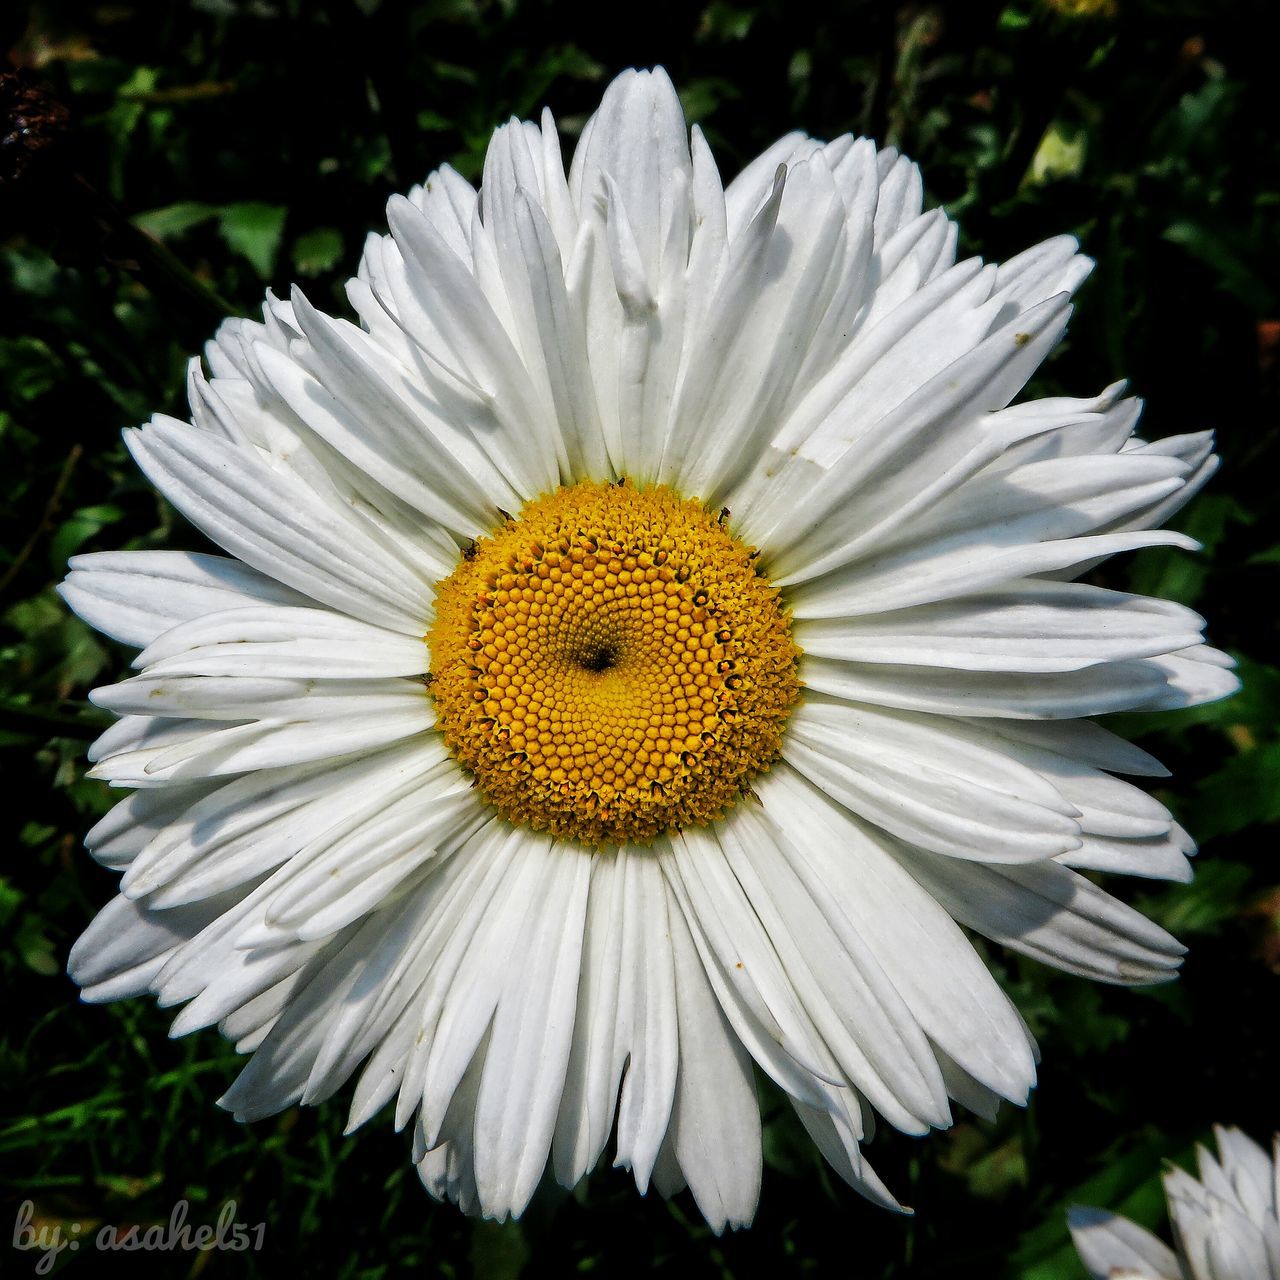 CLOSE-UP OF FRESH WHITE FLOWER